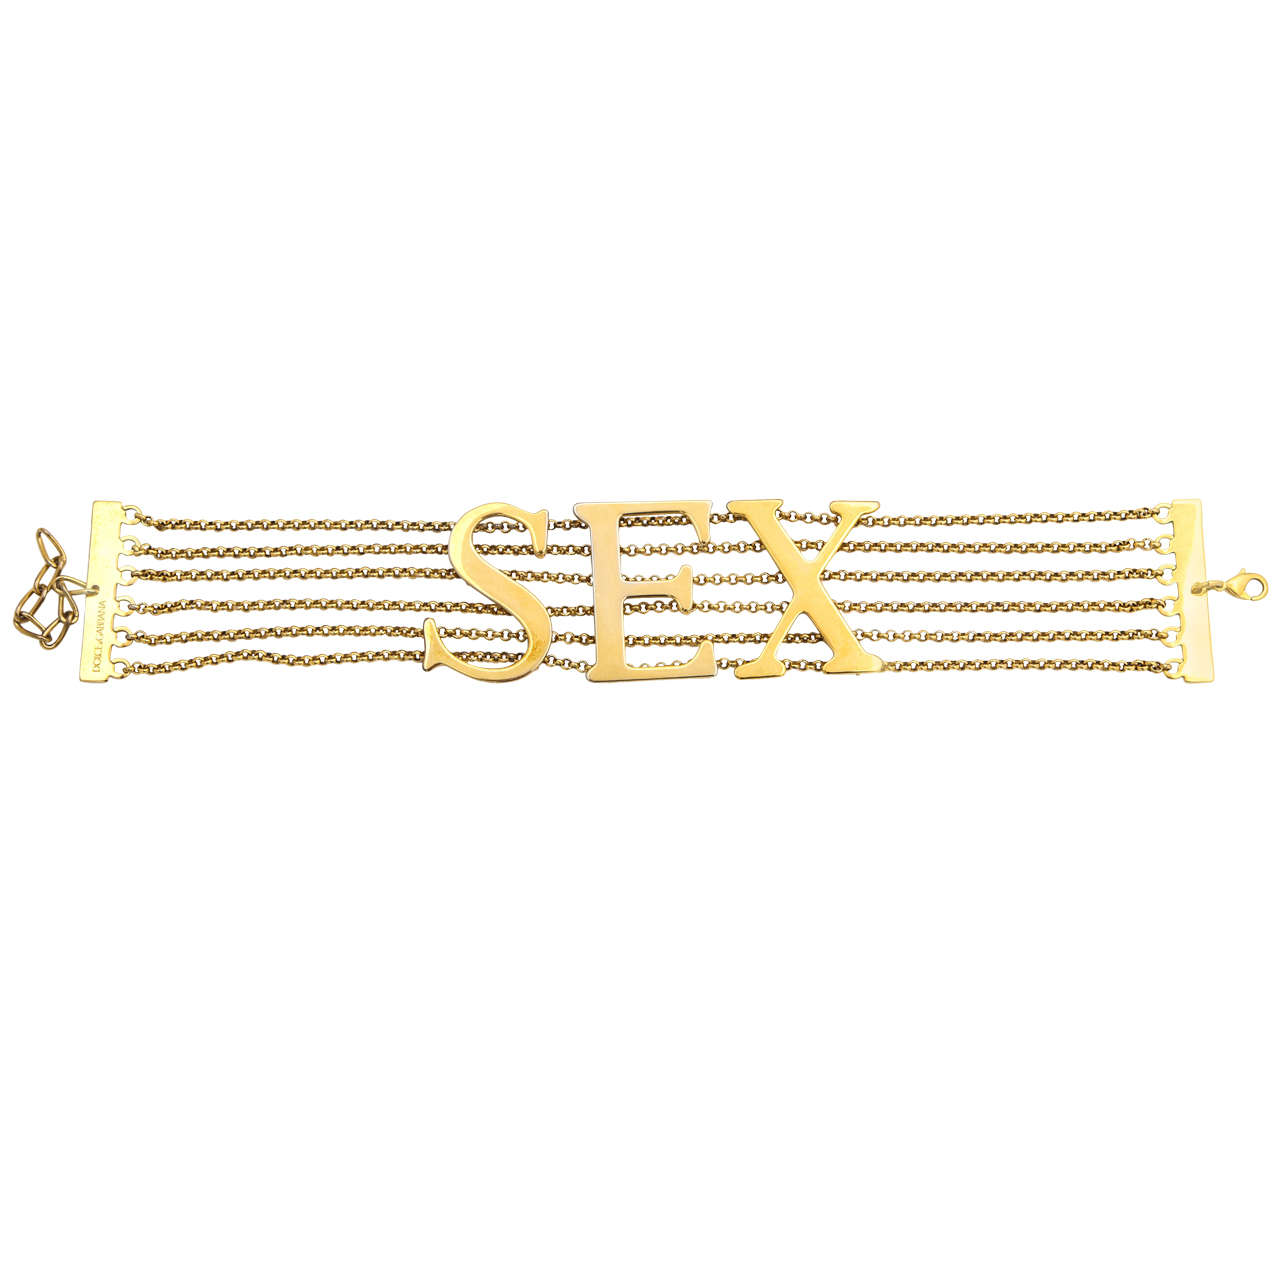 Iconic Dolce & Gabbana "SEX" Choker Necklace